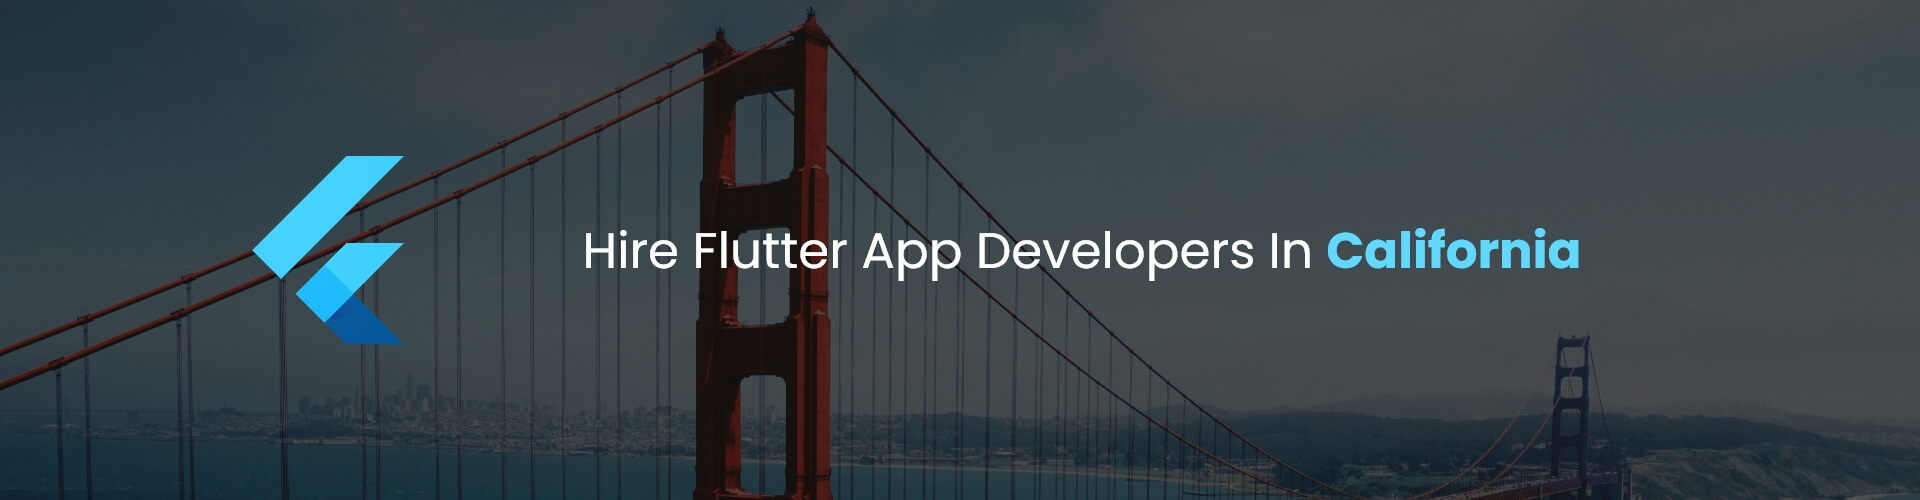 hire flutter app developers in california